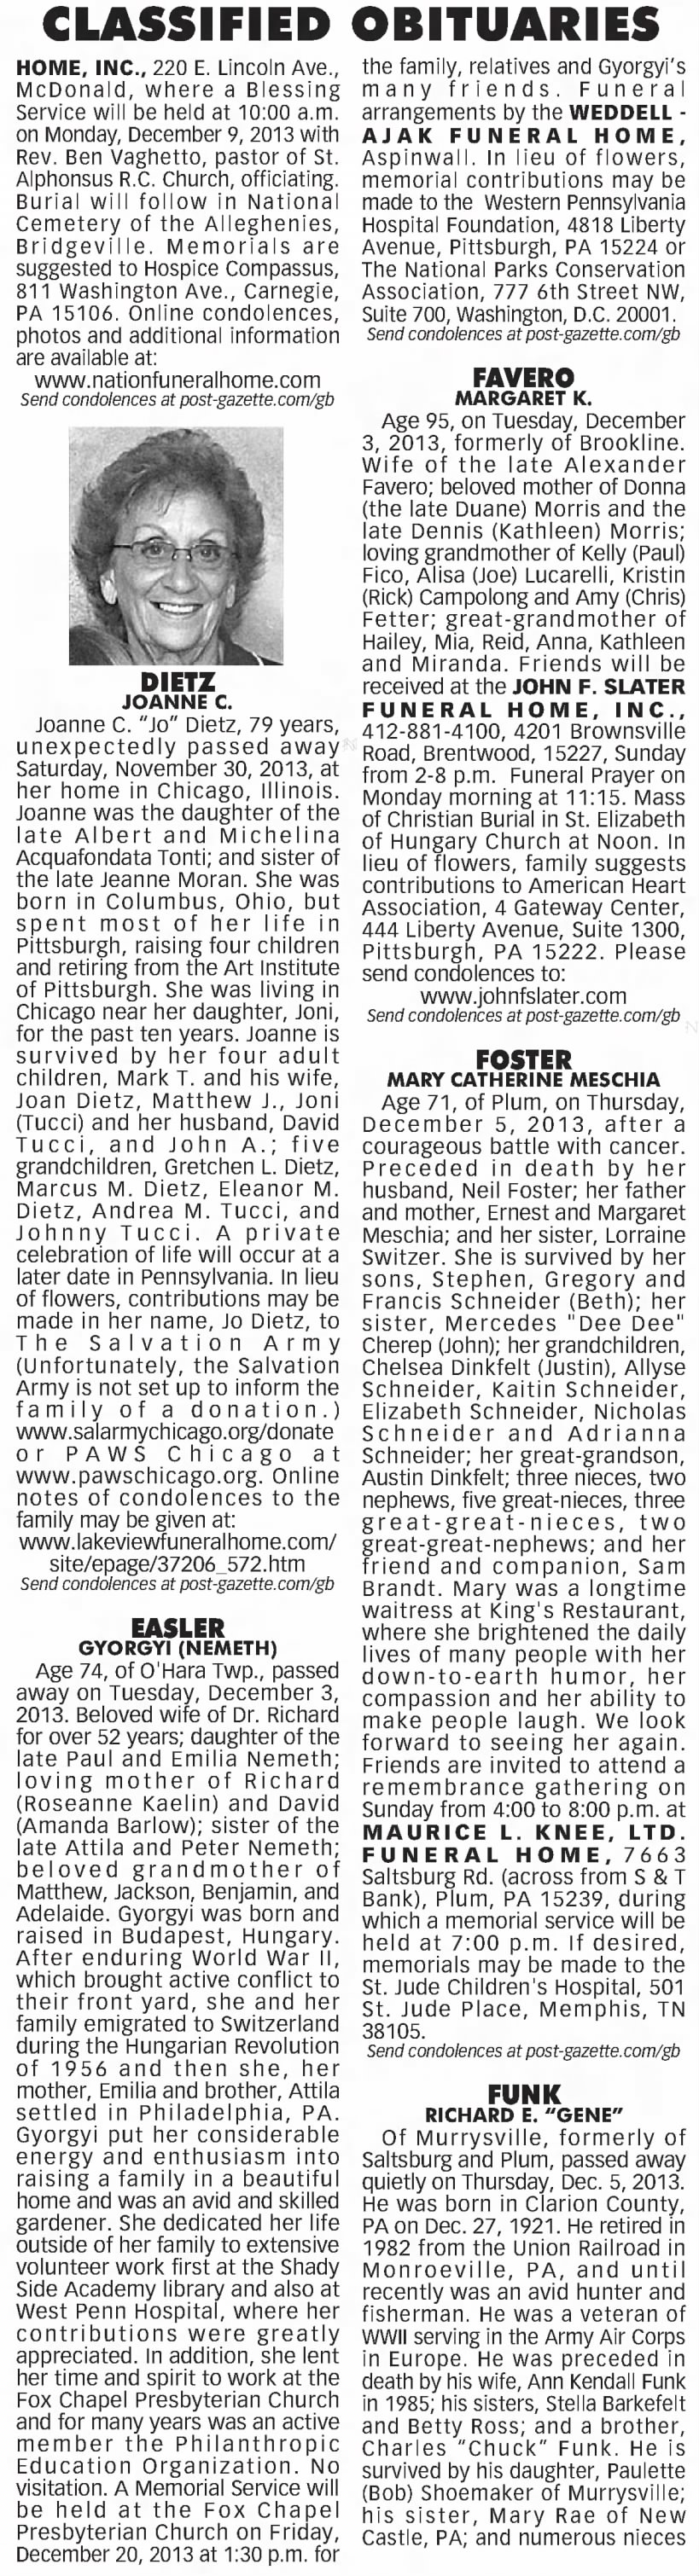 Obituary - Gyorgyi Nemeth Easler (near bottom of first column and top of 2nd column)